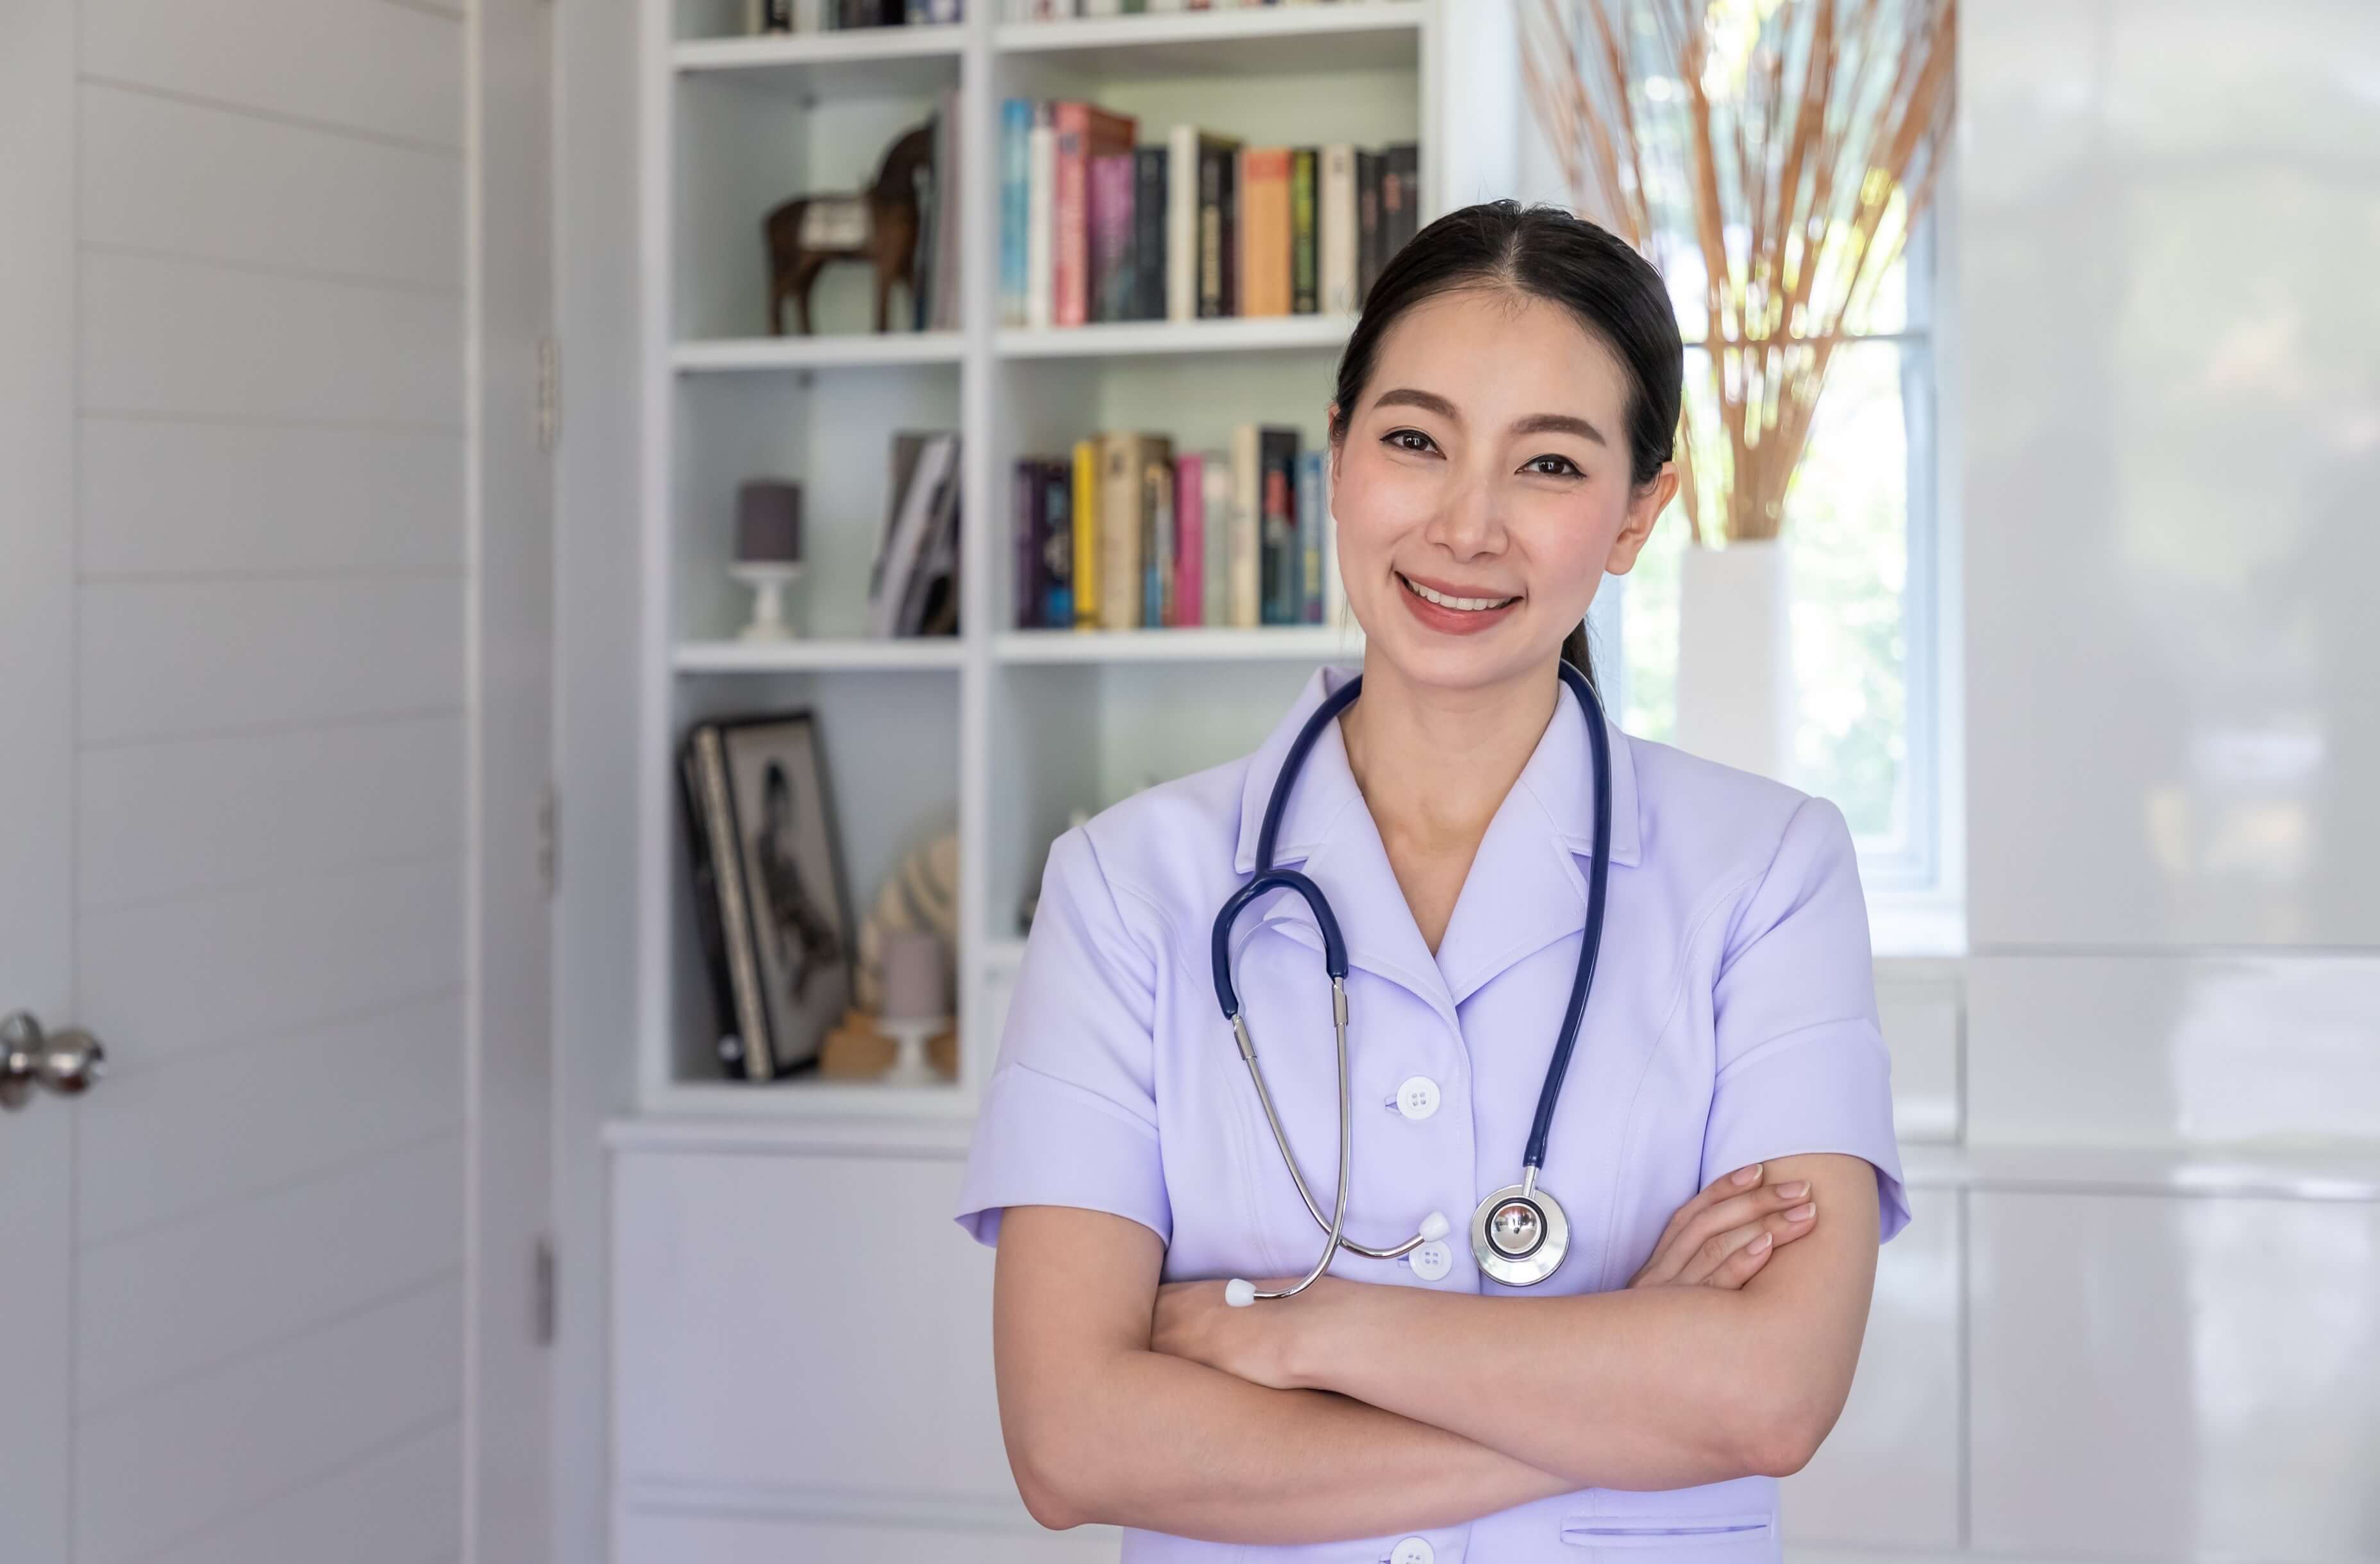 Portrait of Smiling Asian Nurse - crossed arms